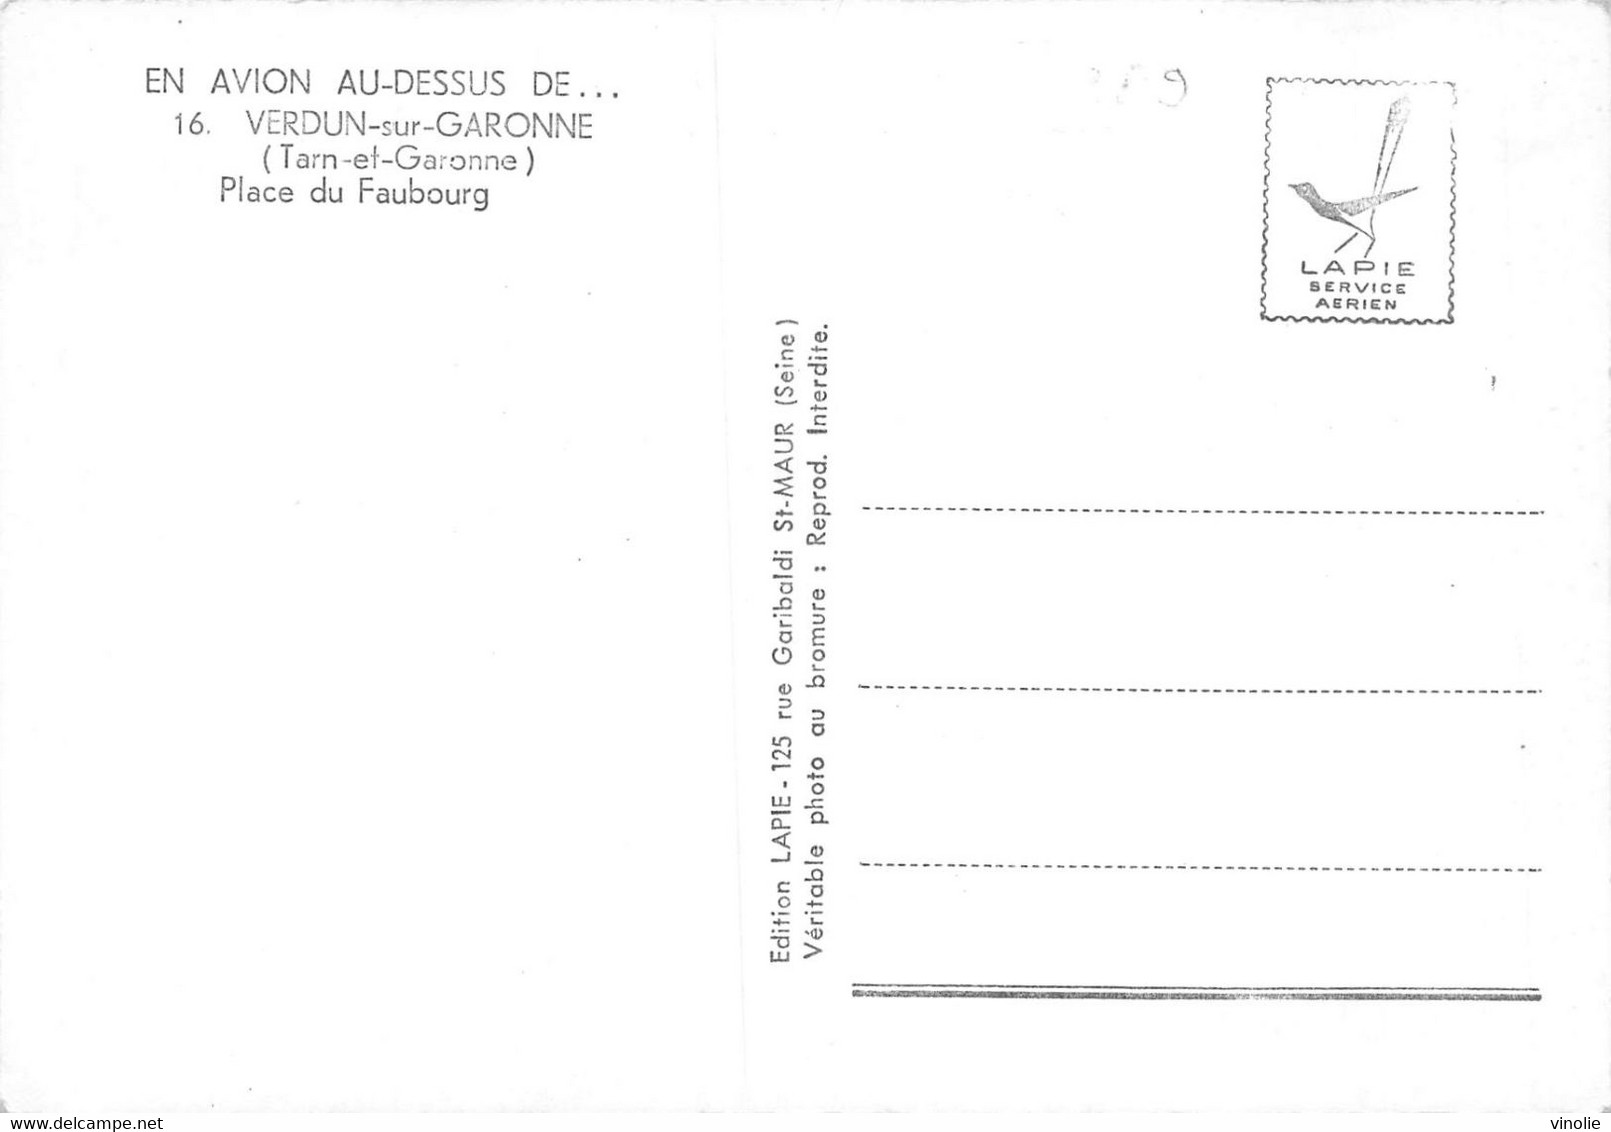 P-FL-M-22-2113 : VUE AERIENNE DE VERDUN-SUR-GARONNE - Verdun Sur Garonne